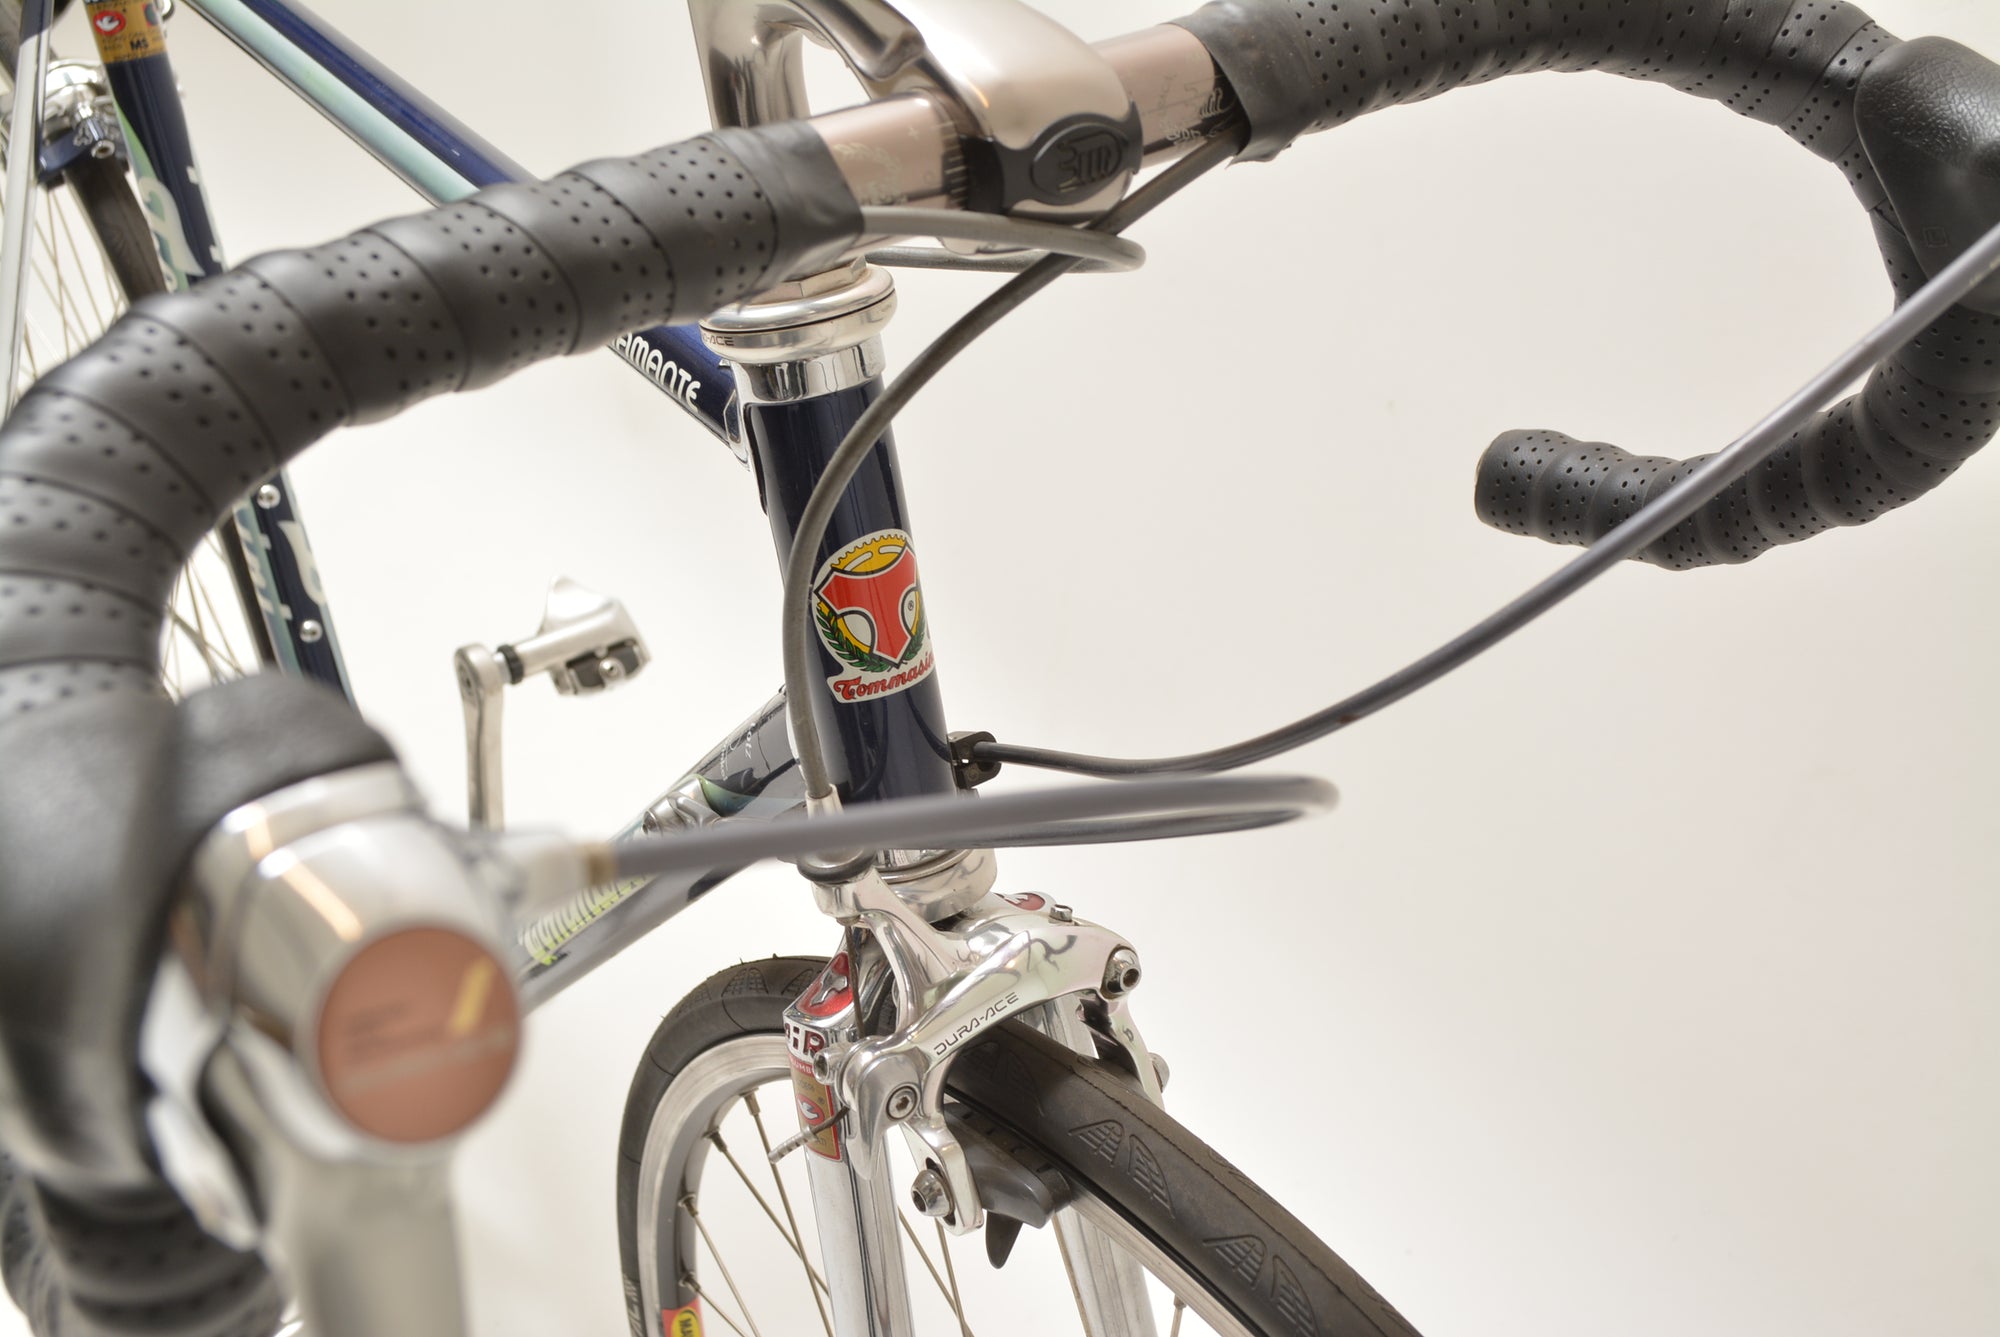 Tommasini Rennrad Rennrad 54cm Shimano Dura Ace Vintage Road Bike